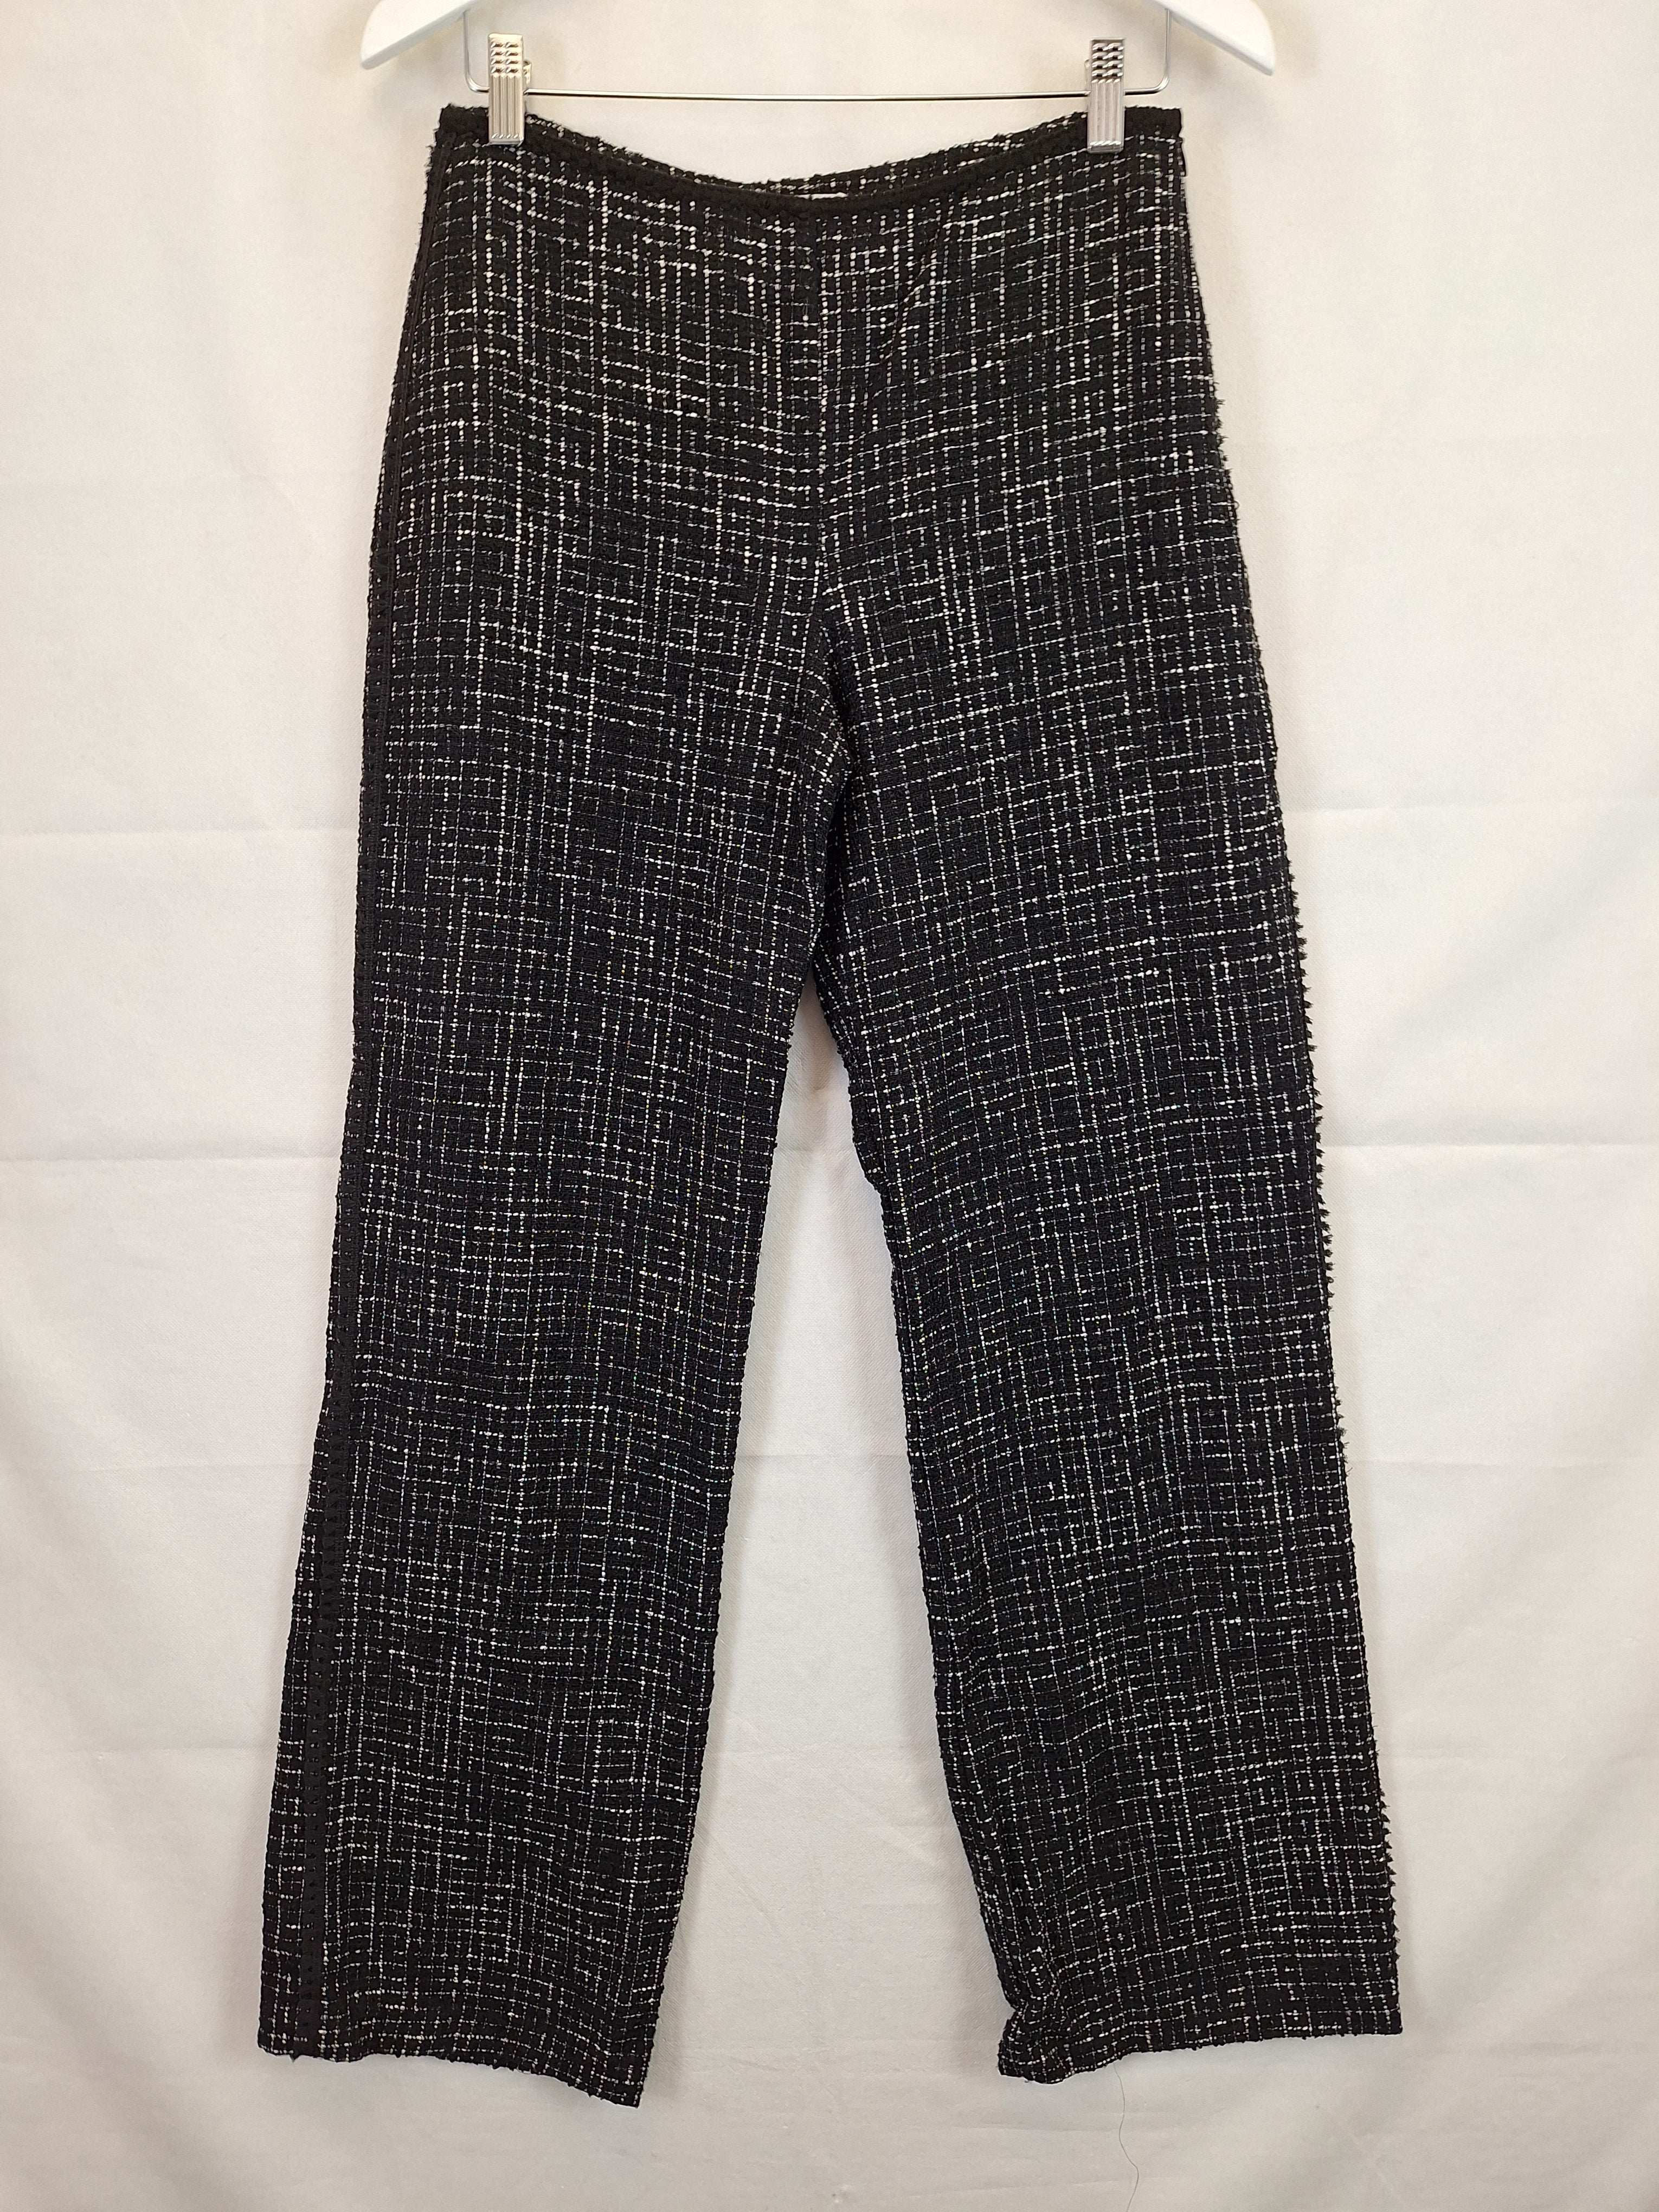 Zara Plaid Checkered High Rise Skinny Pants Sz S Stretch Trousers Slacks |  eBay